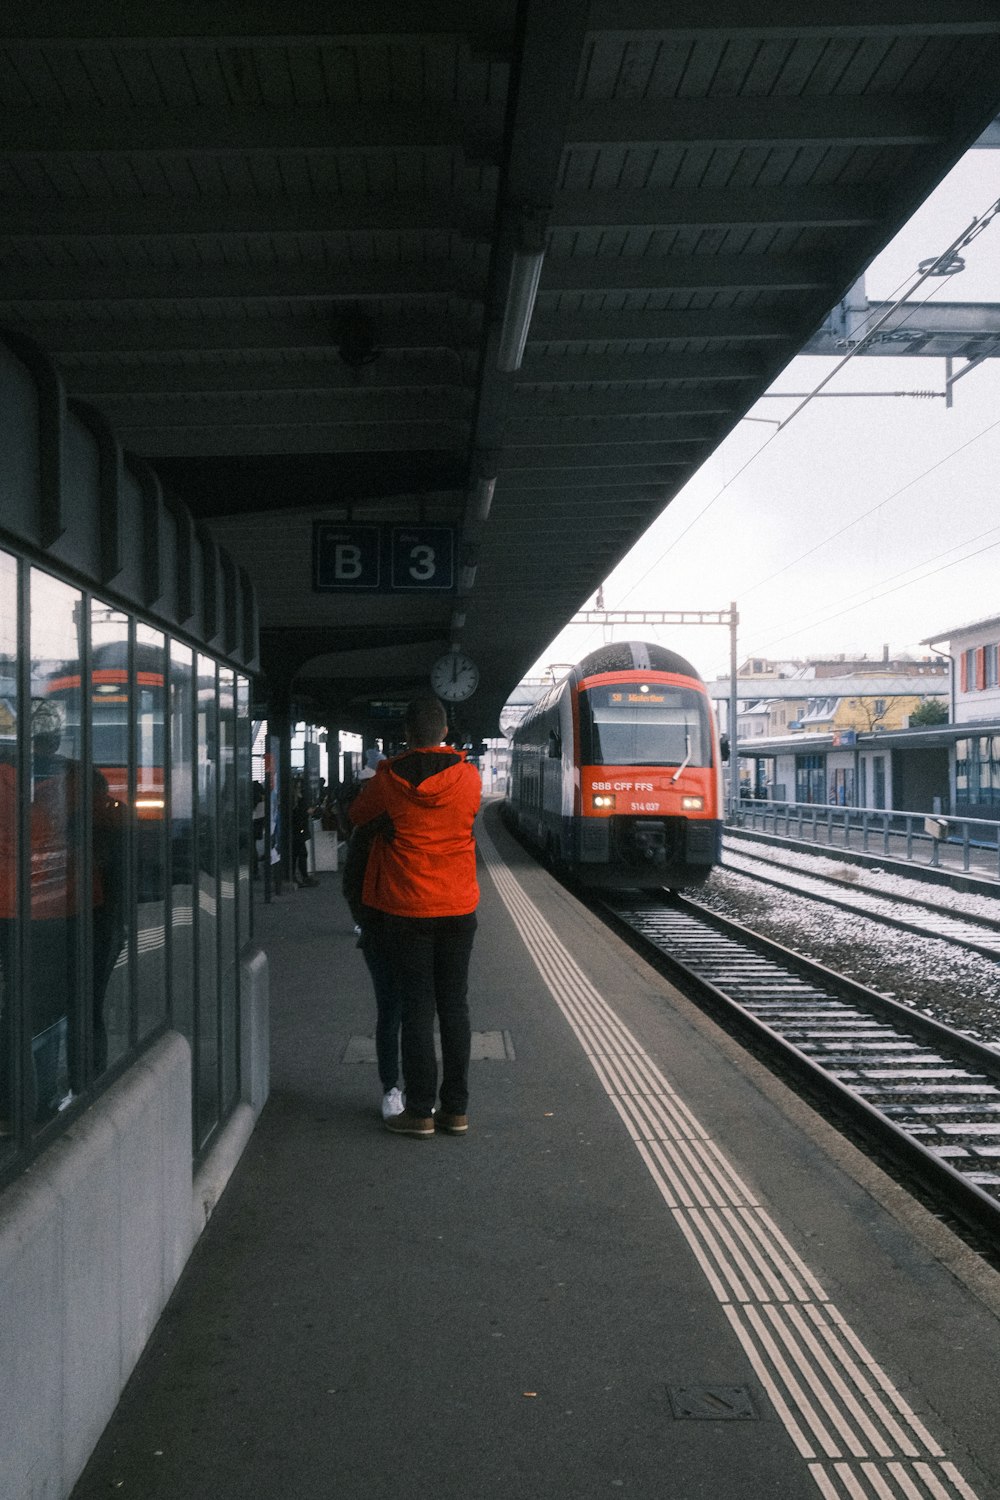 a person standing on a train platform near a train